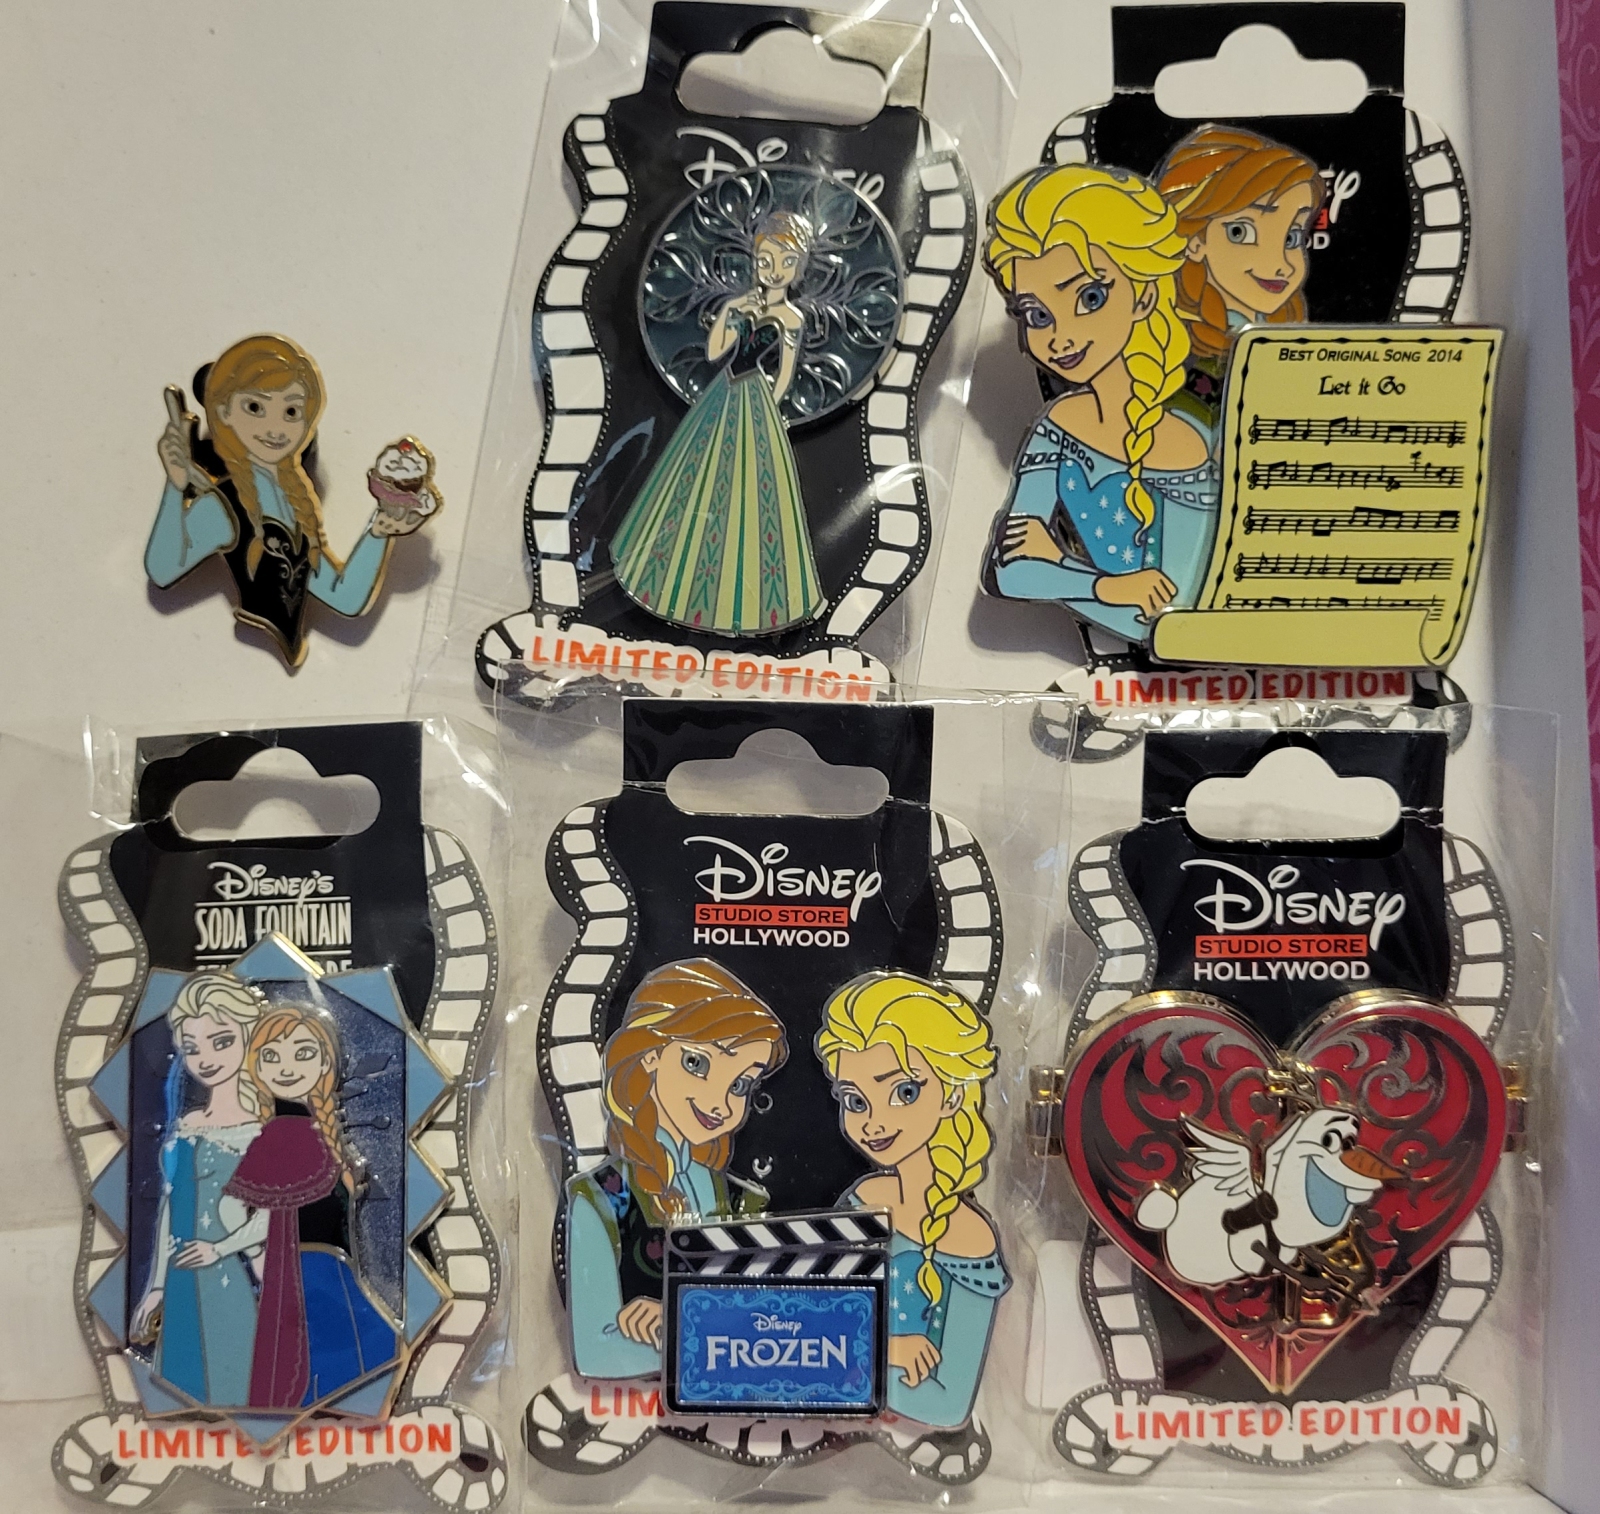 Disney Studio Store Hollywood Frozen Pins